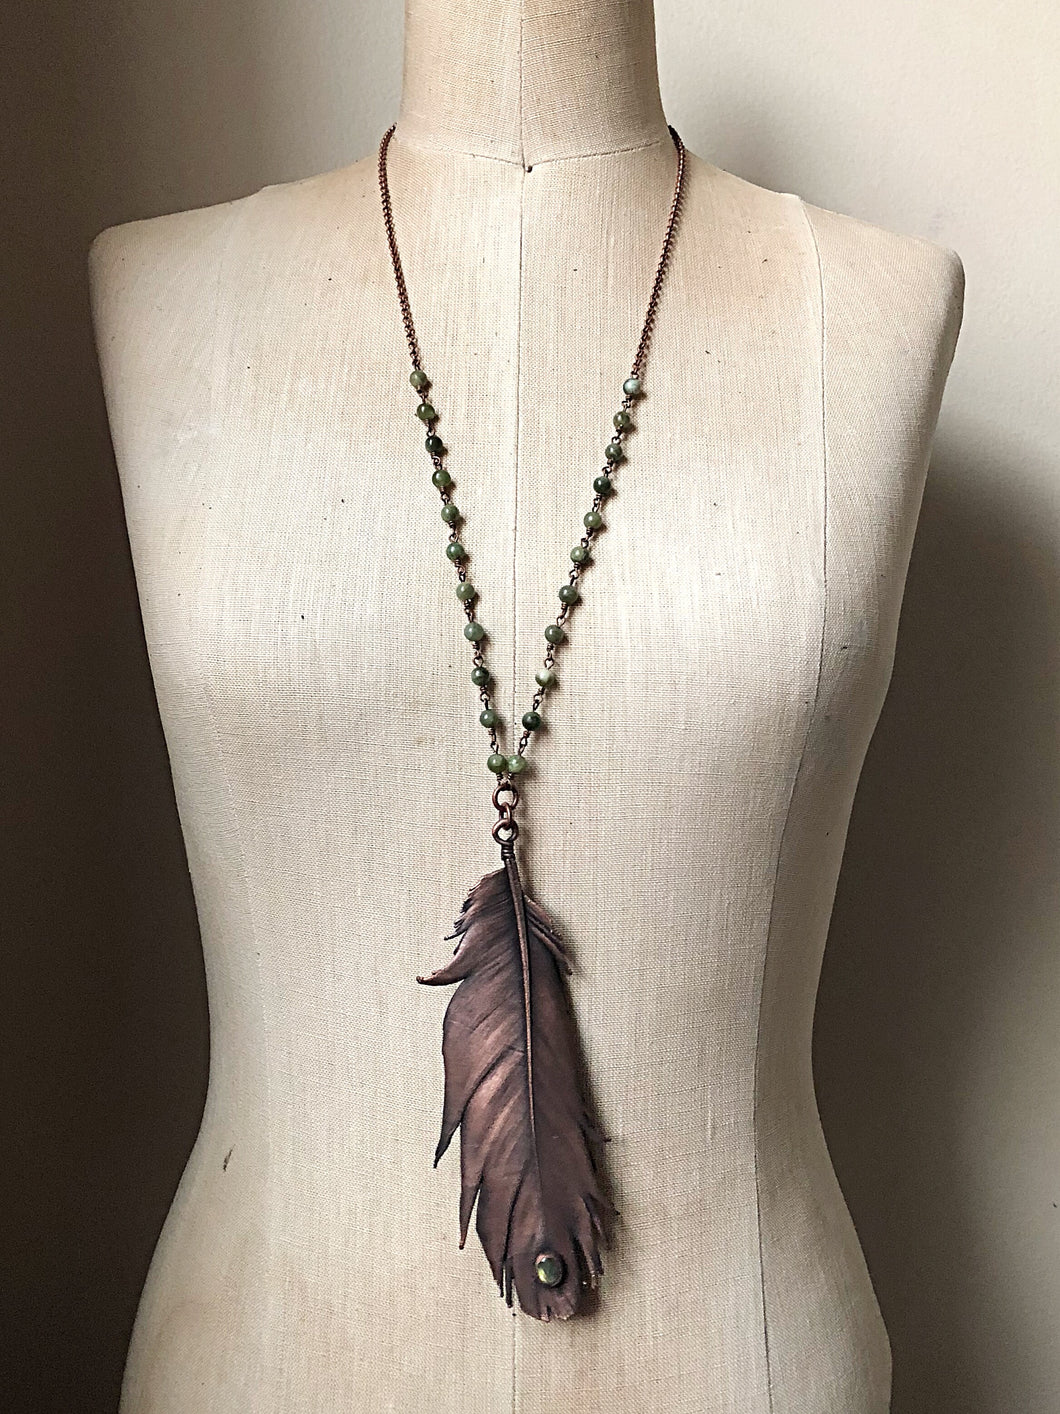 Electroformed Feather and Labradorite Necklace #2 - Ready to Ship